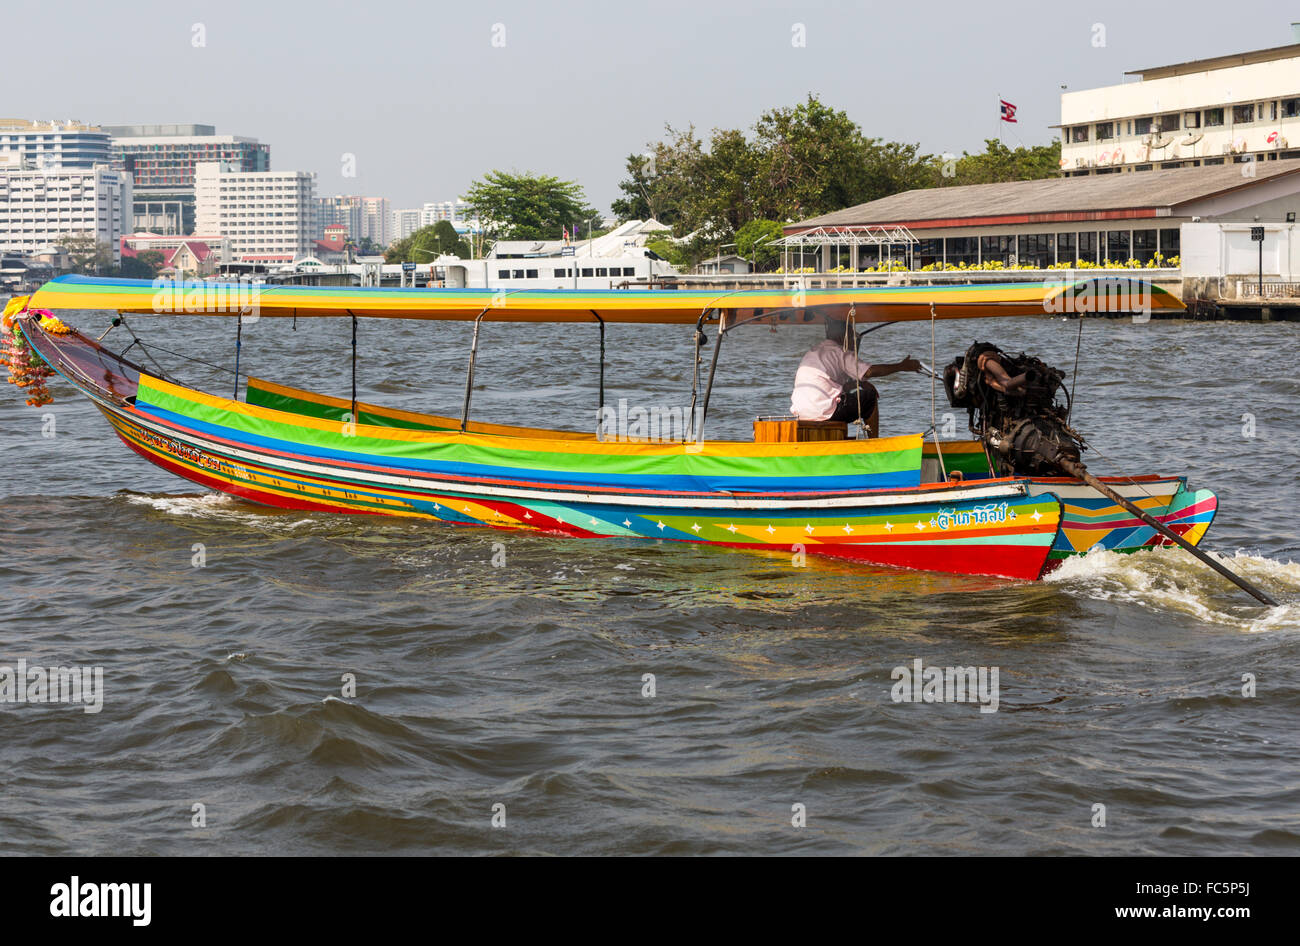 Barca long-tail sul Fiume Chao Phraya, Bangkok, Thailandia, Asia Foto Stock